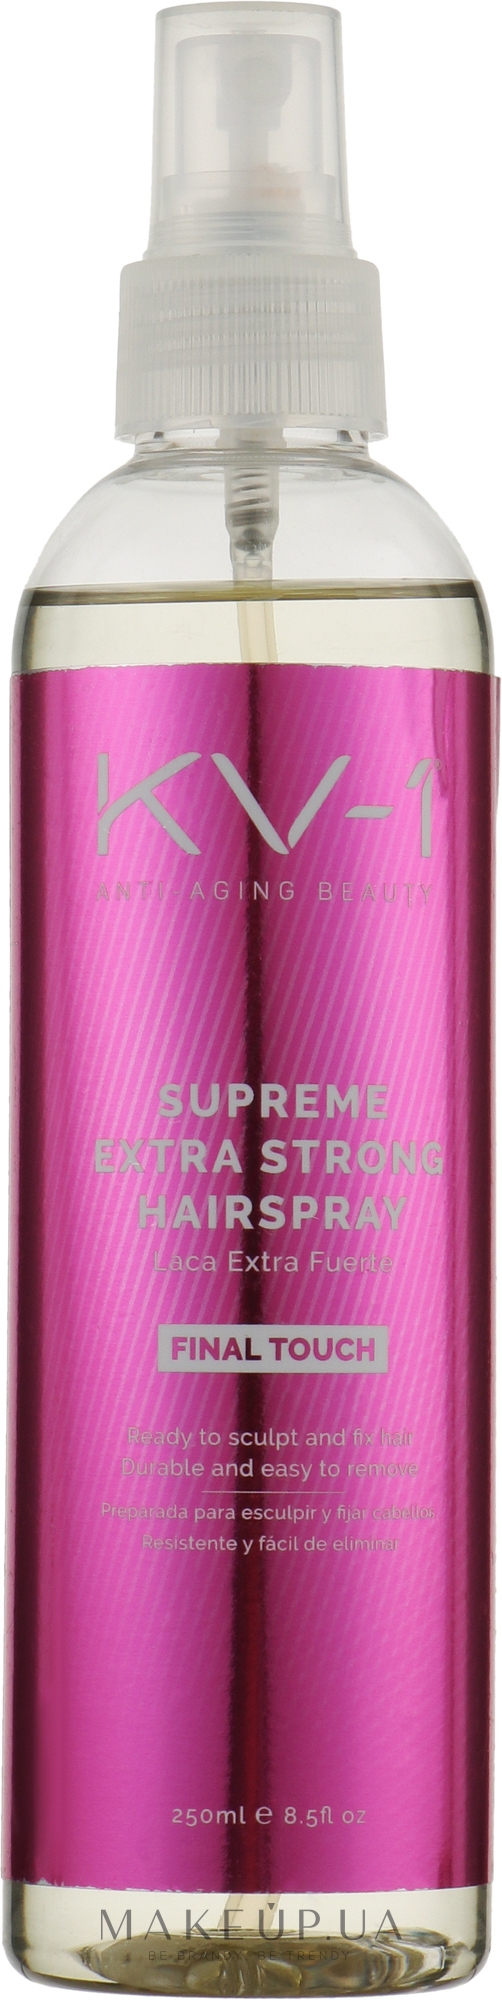 Лак для волосся екстрасильної фіксації - KV-1 Final Touch Supreme Extra Strong Hairspray — фото 250ml